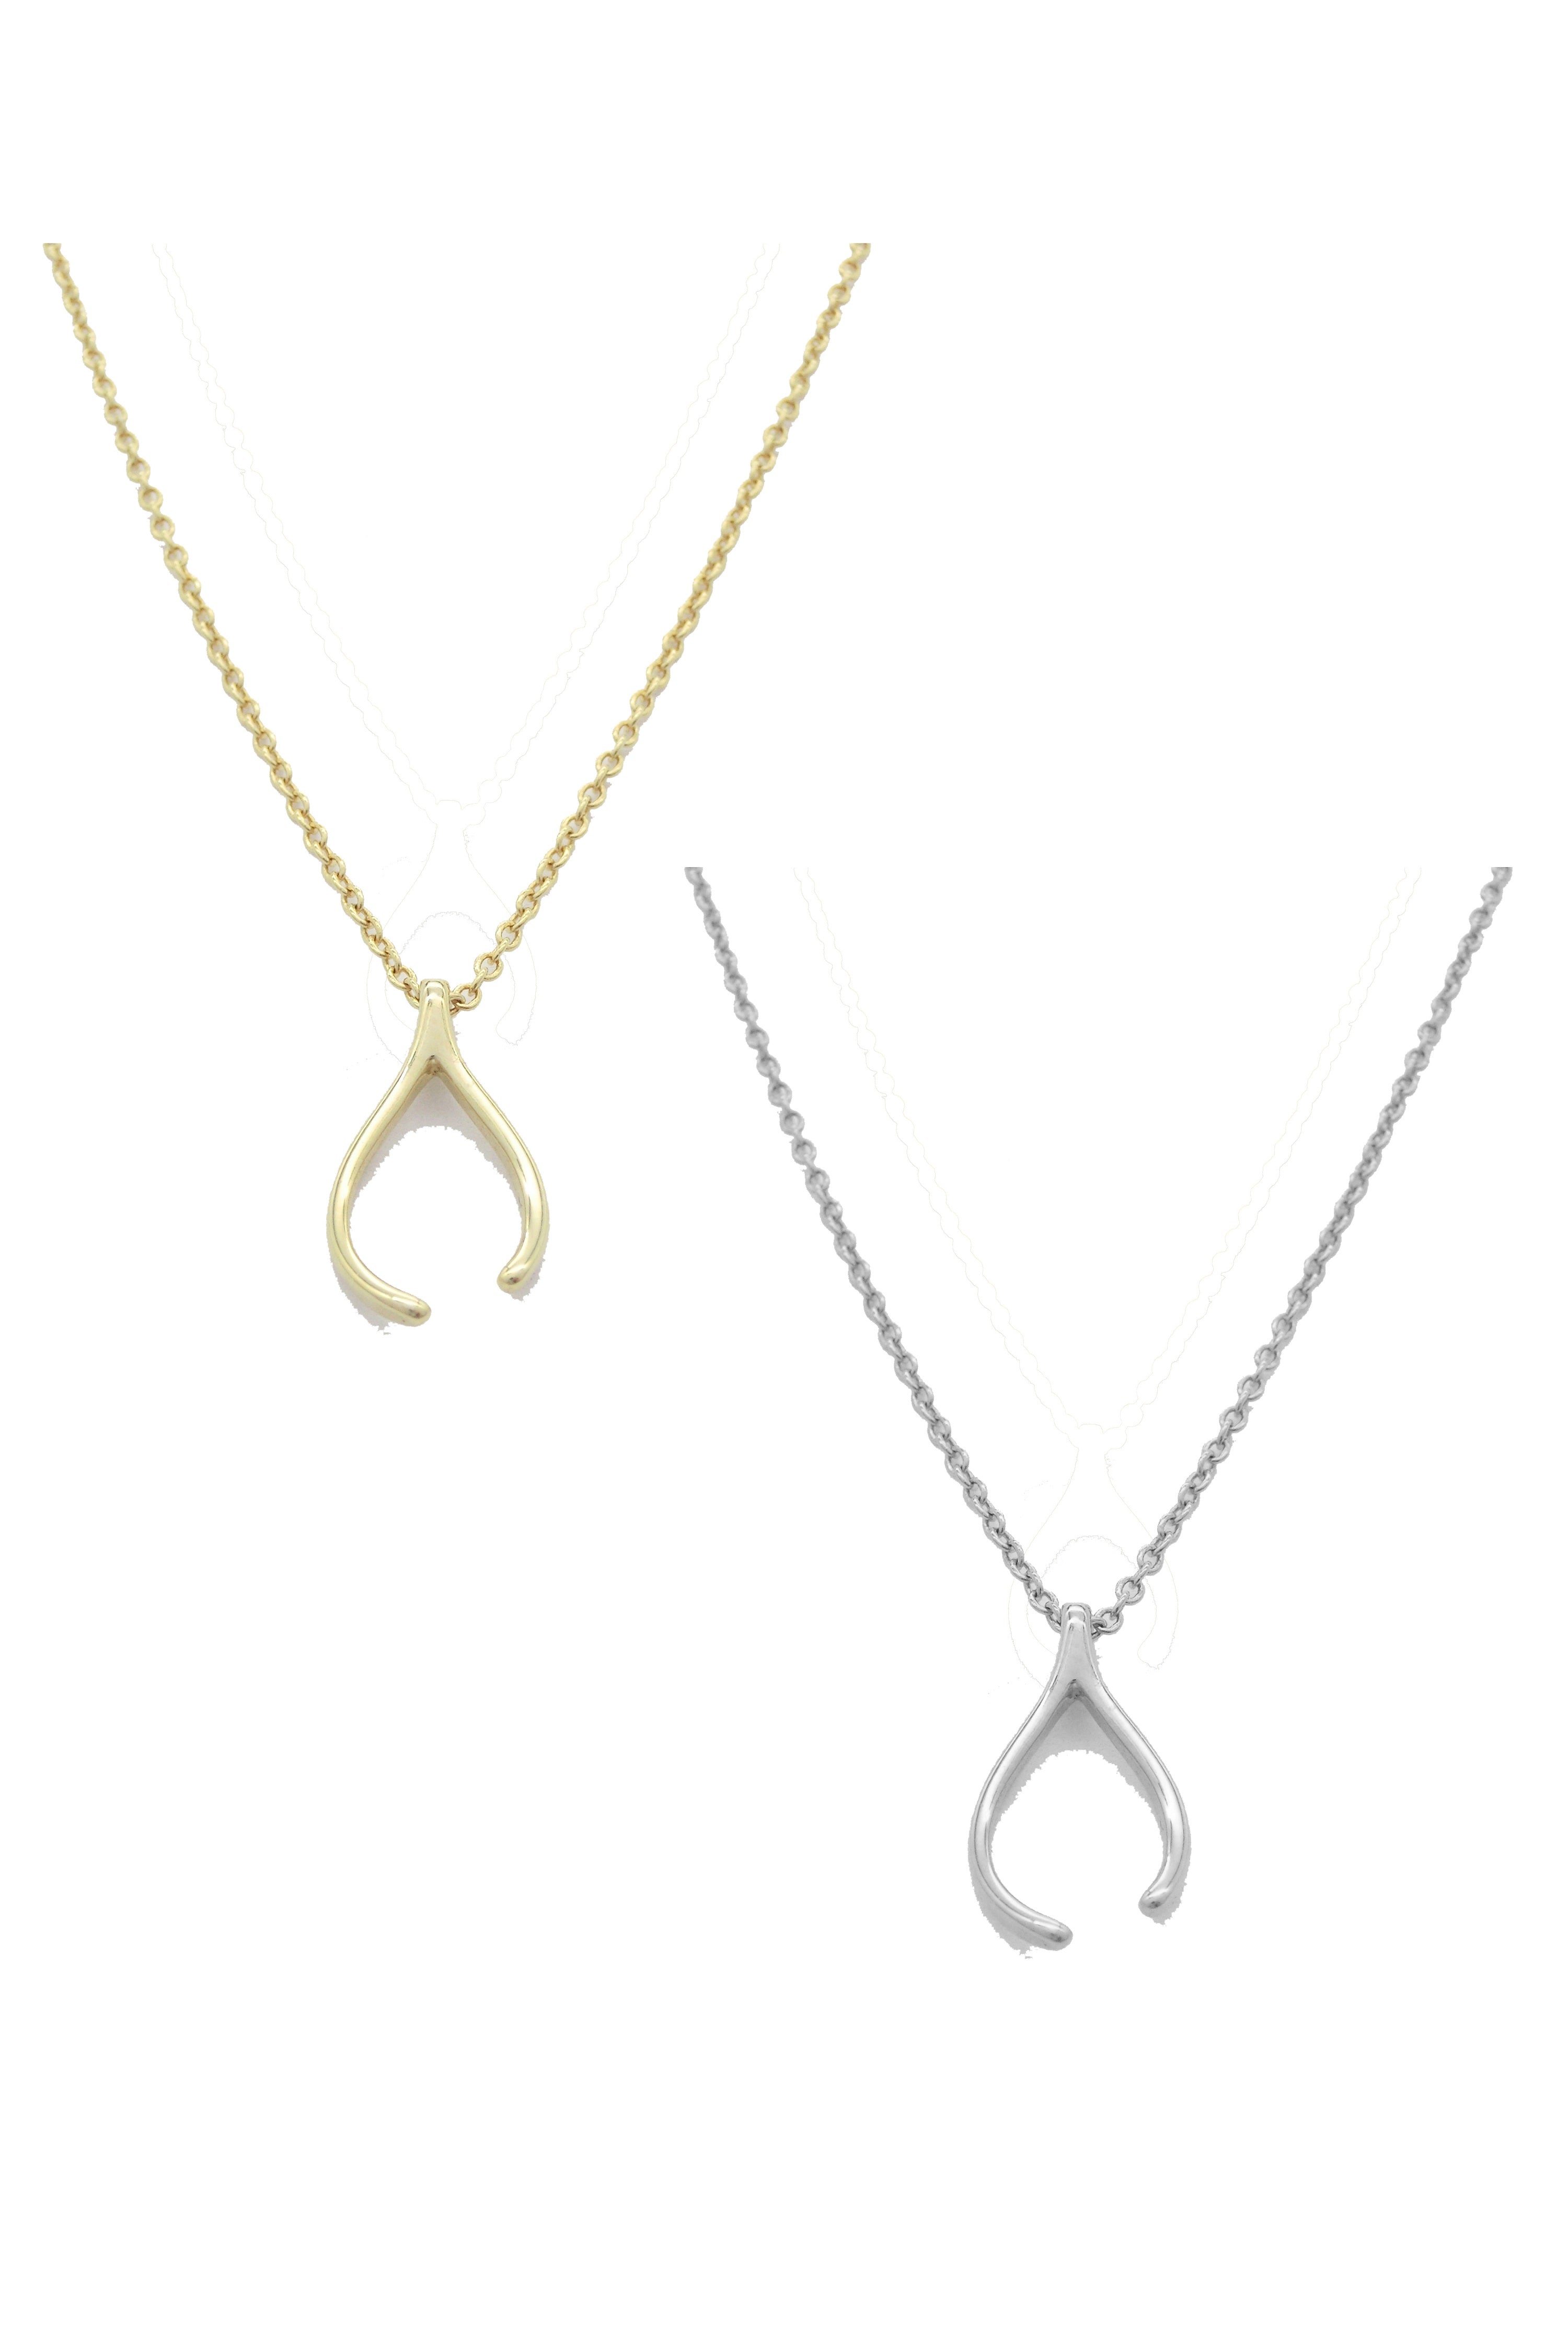 Handmade Wishbone Necklace Gold 14K